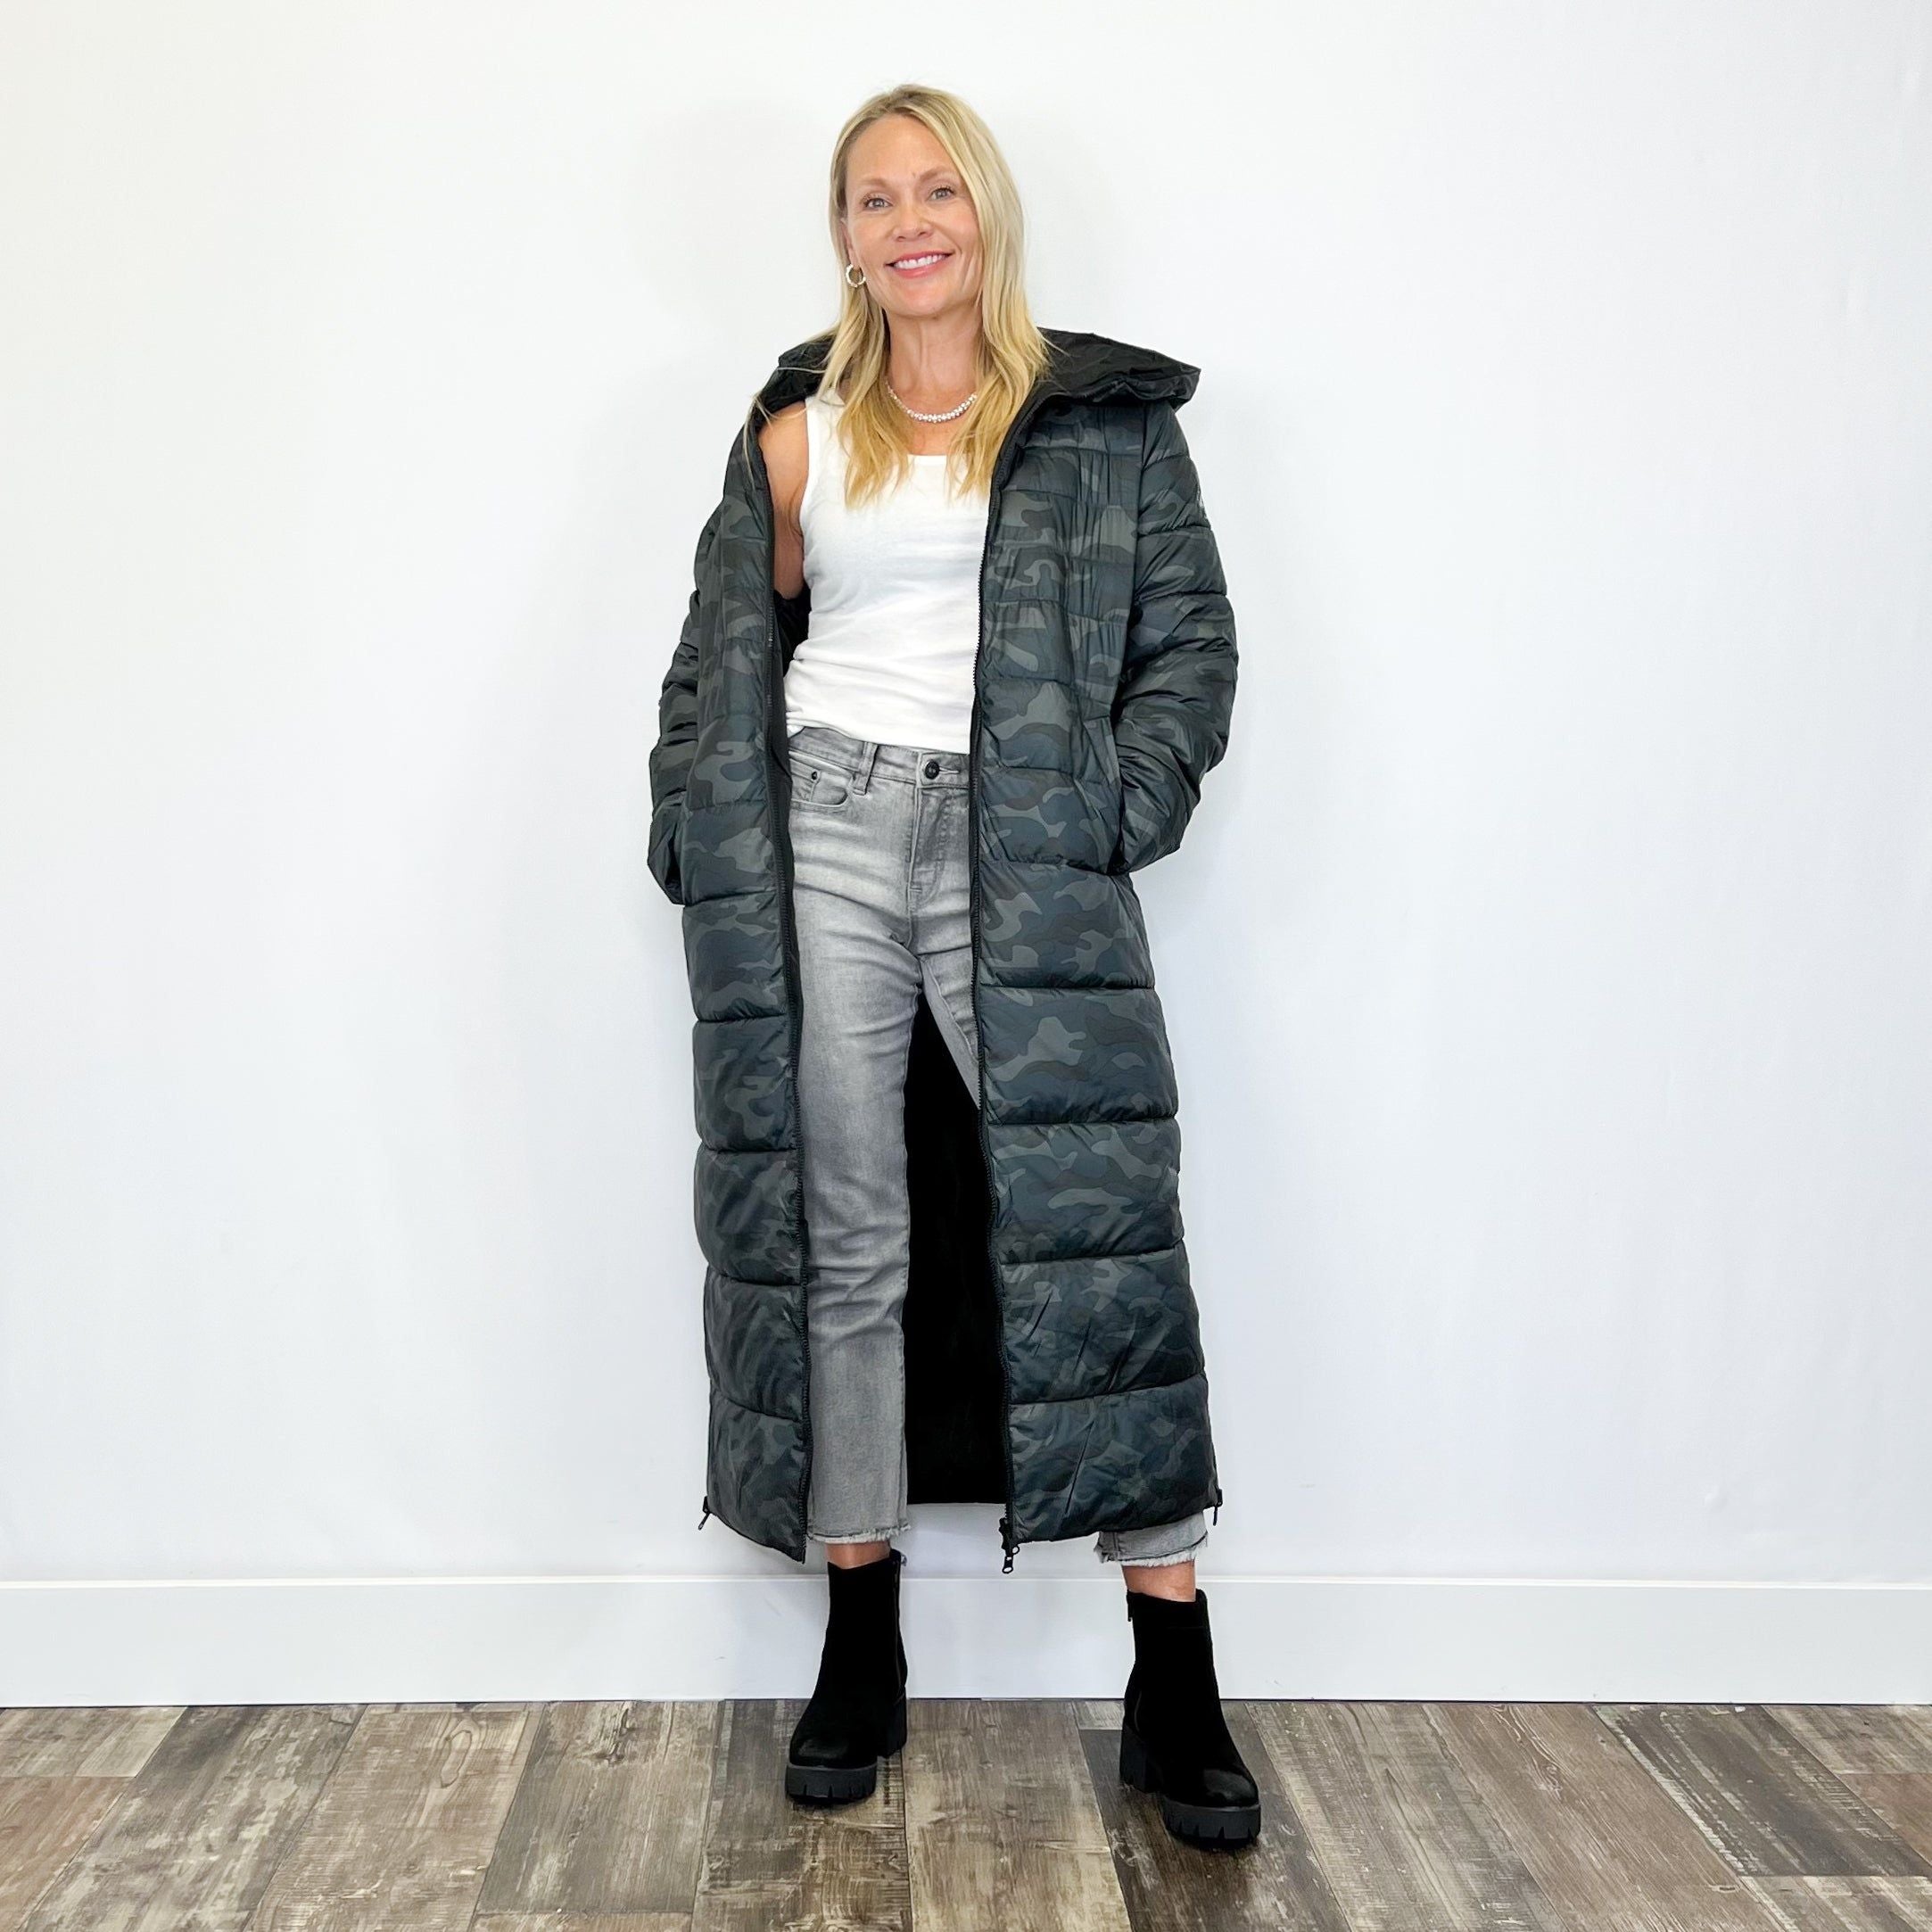 YEST - Camo Winter Long Puffer Coat - Arktana - Jackets